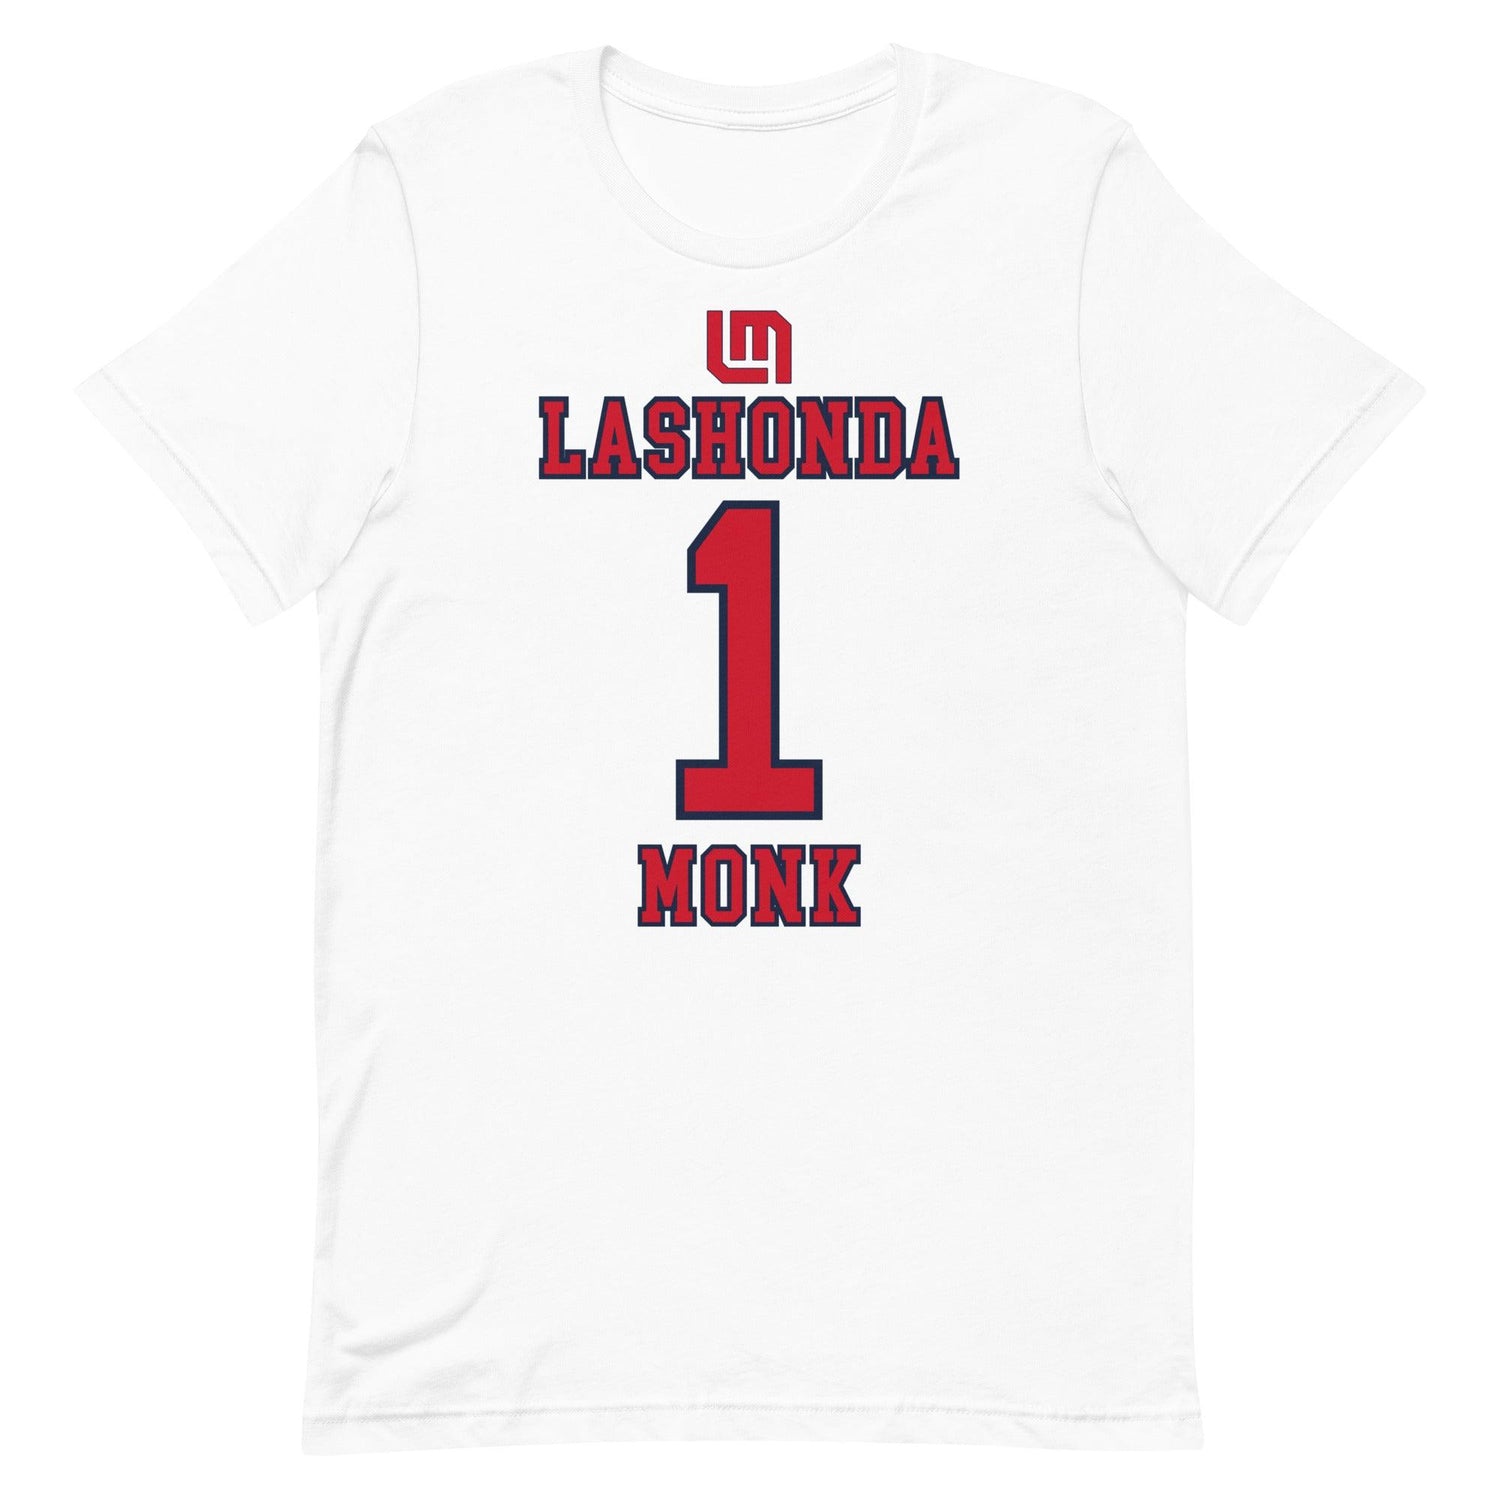 Lashonda Monk "Jersey" t-shirt - Fan Arch